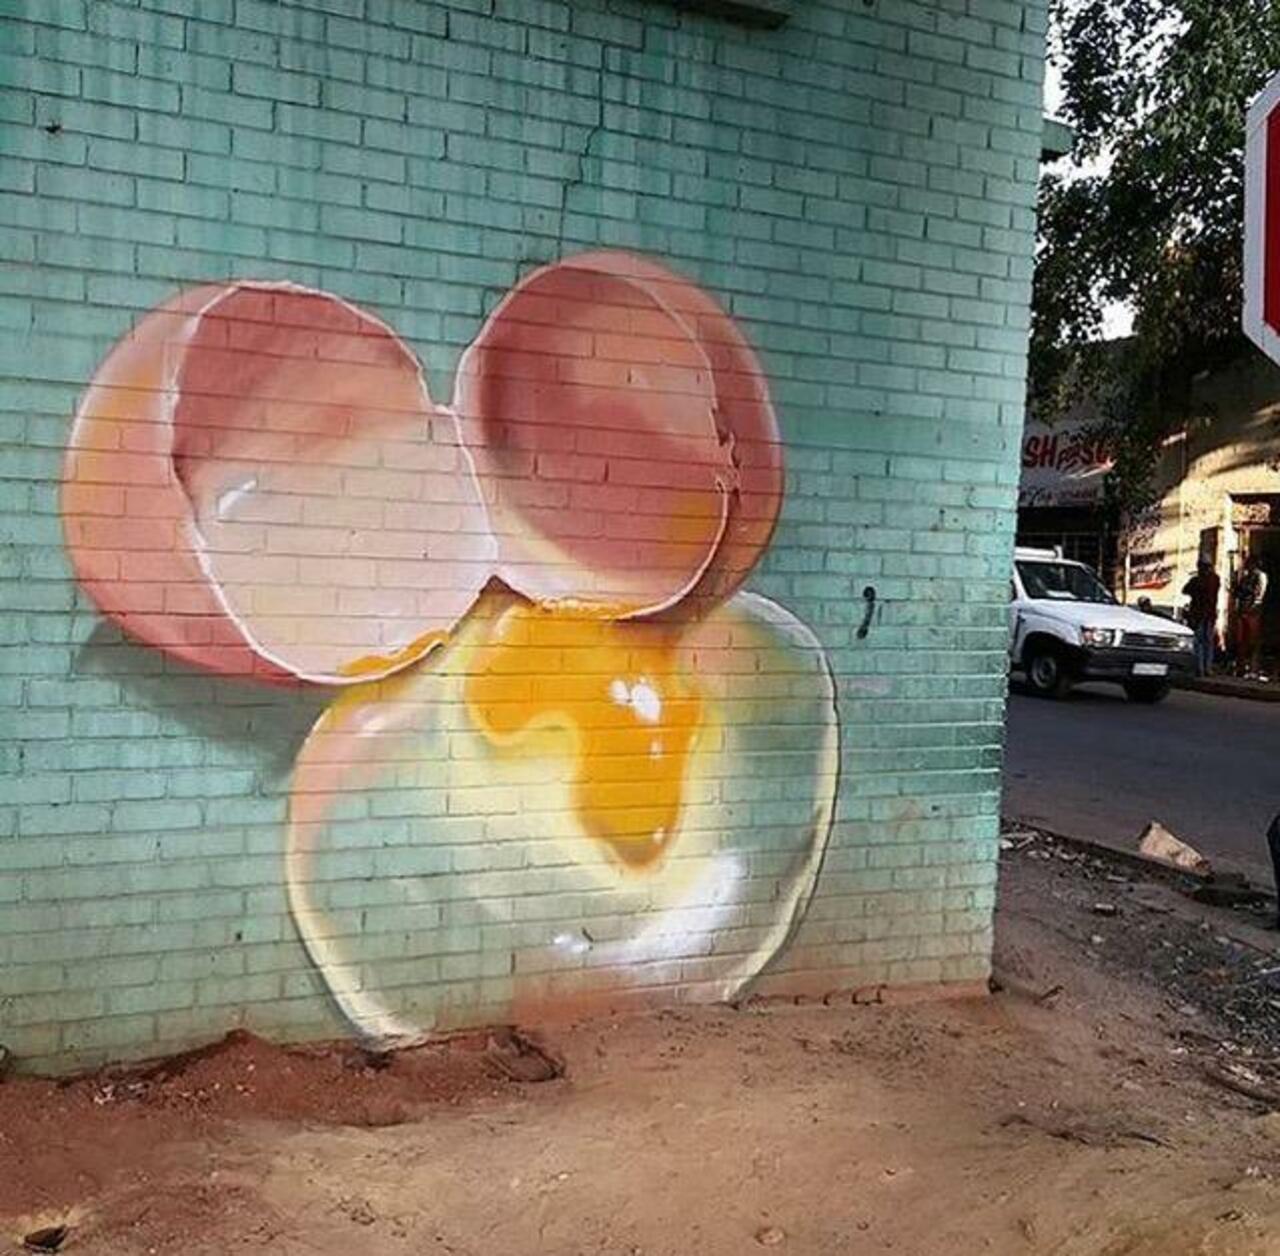 ＠rzzp ＠Kanta_1123 ＠kanta_1123 だいすきよー　Street Art by falco1 in Johannesburg SA  

#art #graffiti #mural #streetart http://t.co/W4h2gOqtAe O…